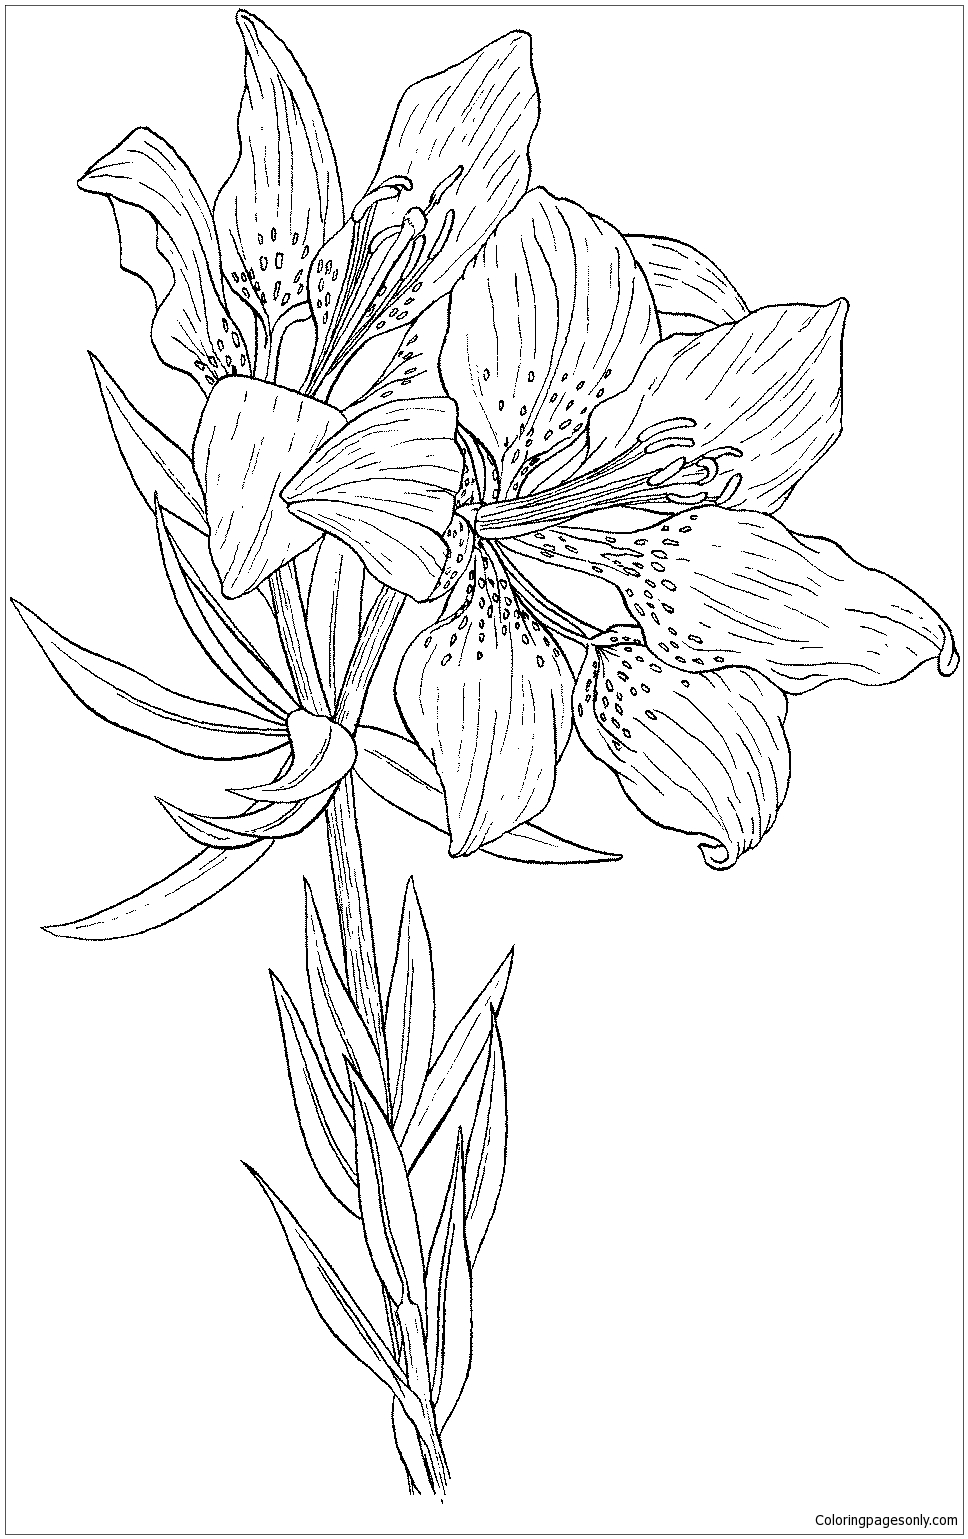 Lilium Philadelphicum or Wild Orange Red Lily Coloring Page